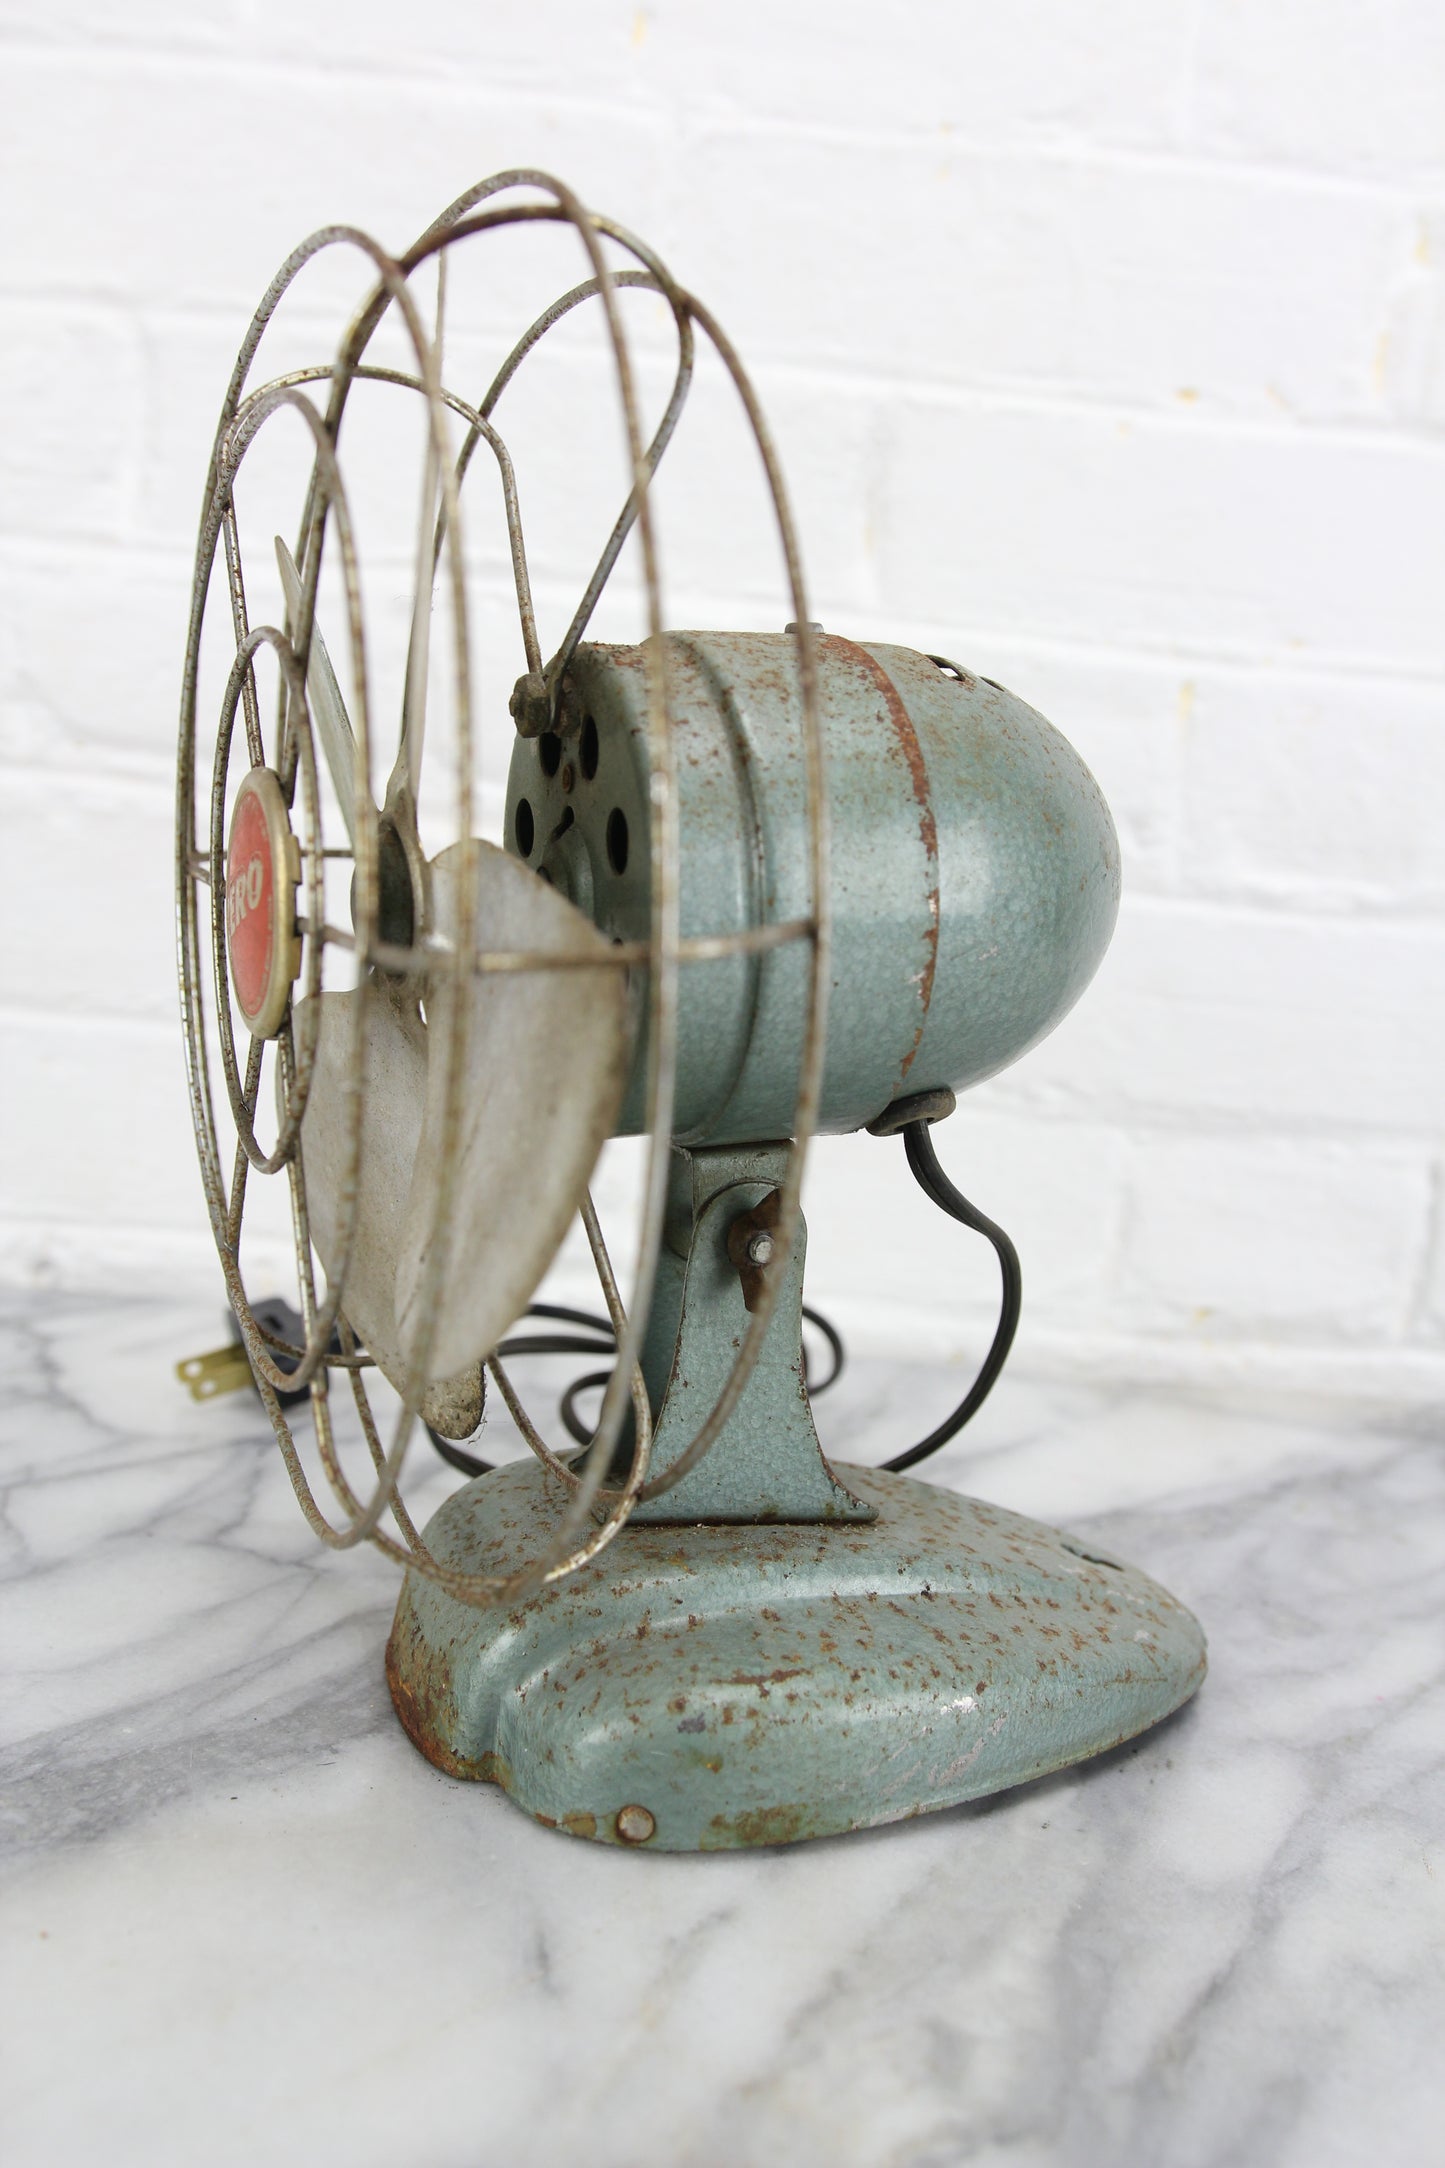 McGraw Electric Company Model 1250R "Zero" Art Deco Electric Fan